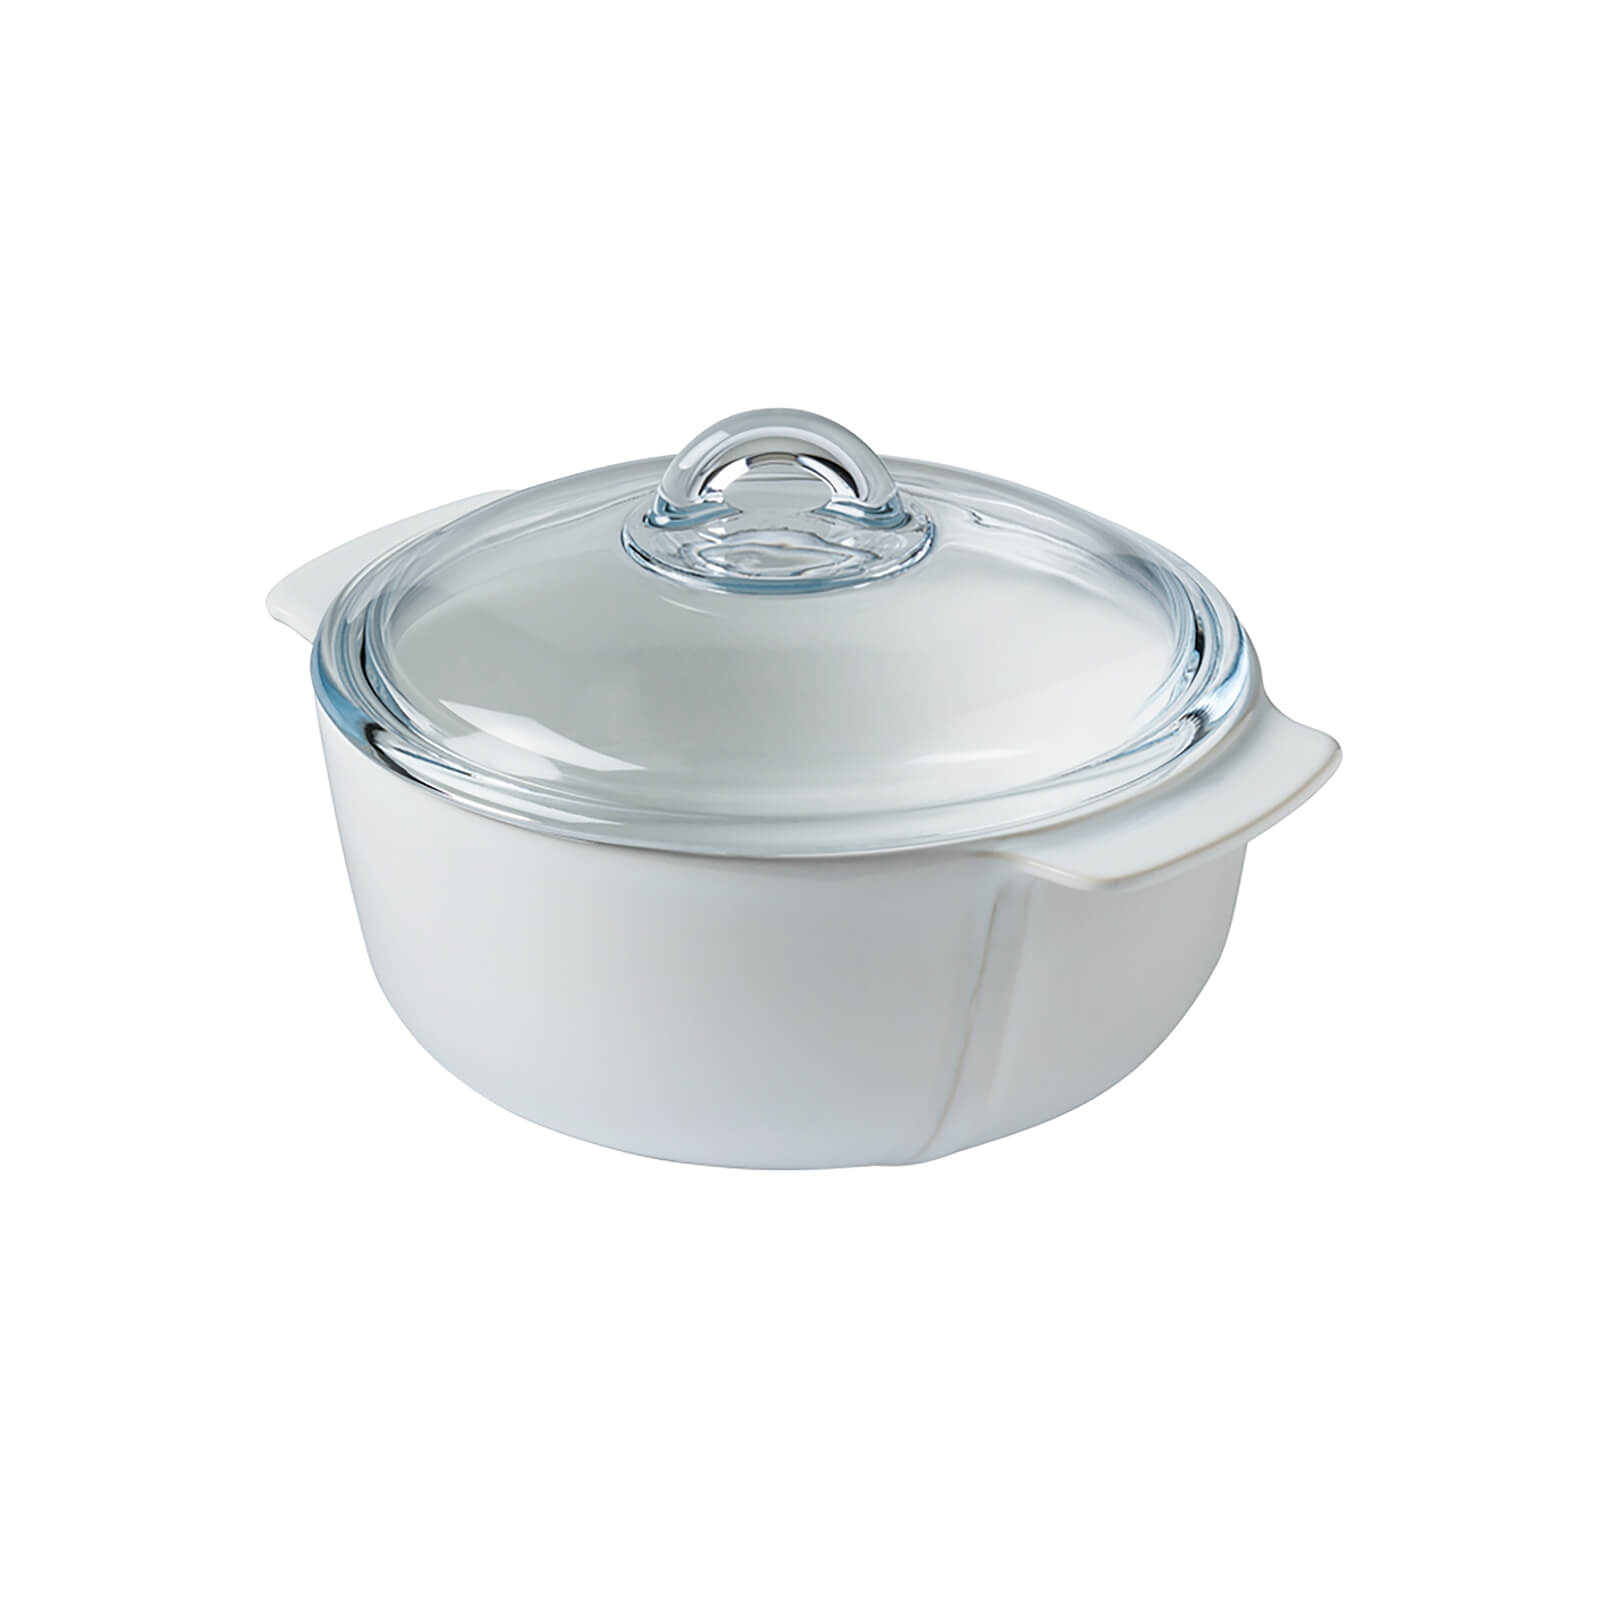 Pyrex Signature Round Casserole Dish - 1.5L - White